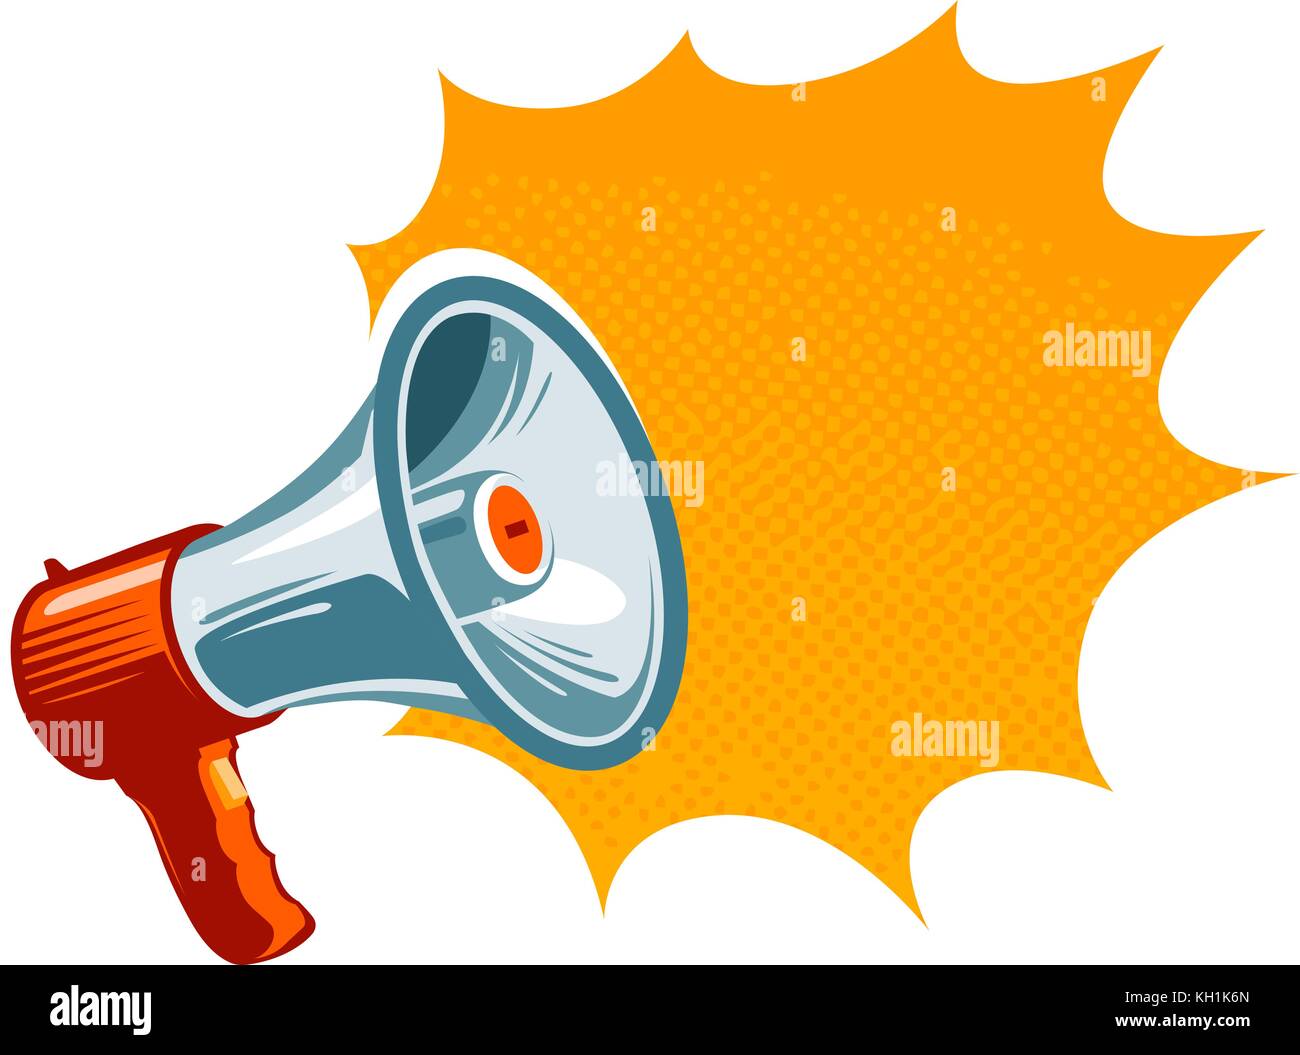 Loudspeaker, megaphone, bullhorn icon or symbol. Advertising, promotion concept. Vector illustration Stock Vector